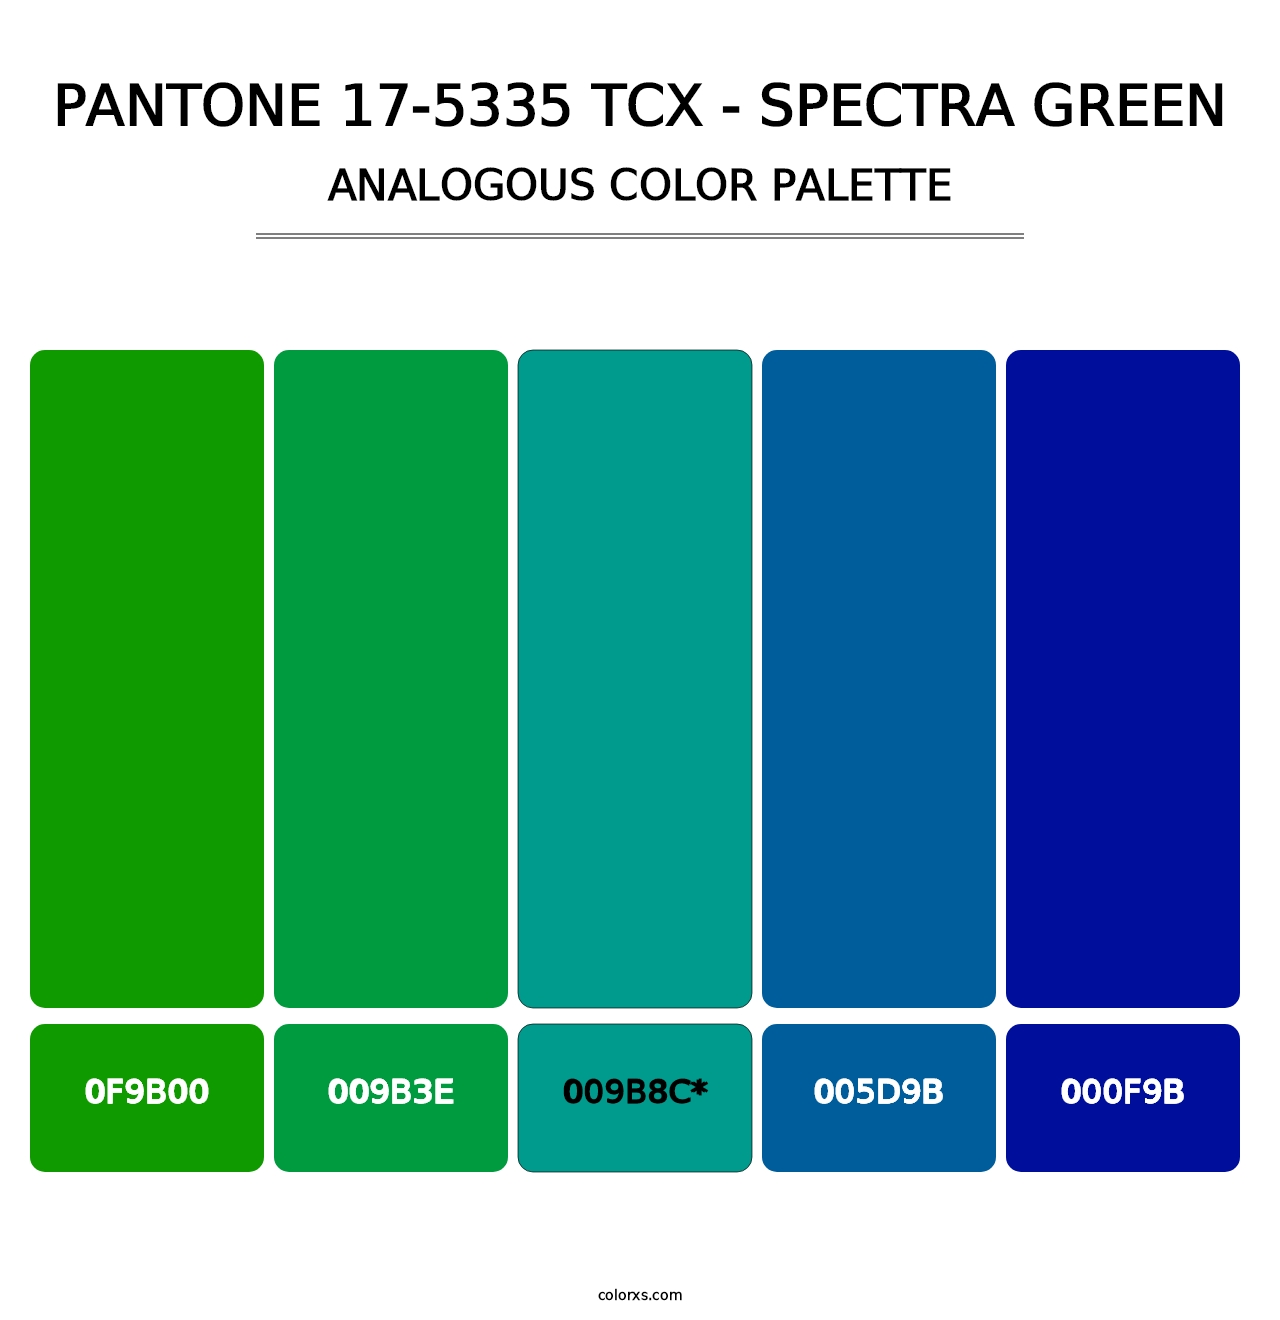 PANTONE 17-5335 TCX - Spectra Green - Analogous Color Palette